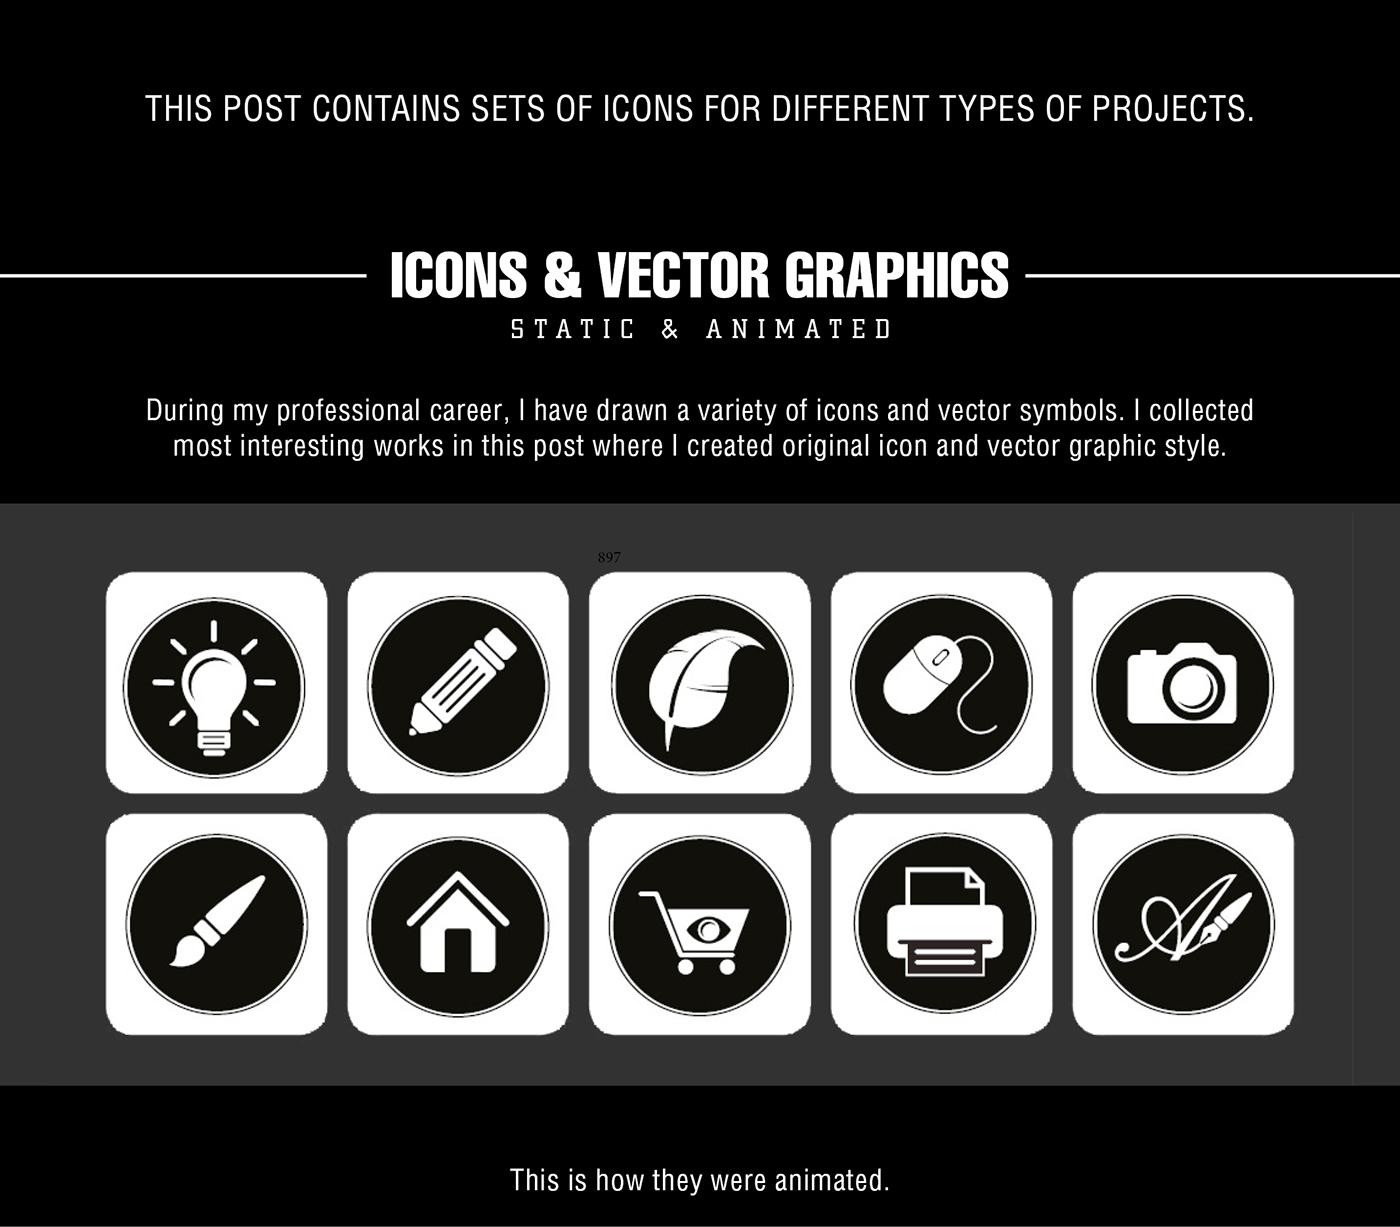 Icon motion graphic vecto illustratio we graphi icon se websit AP illustrato Presentatio Vide healt burn desig